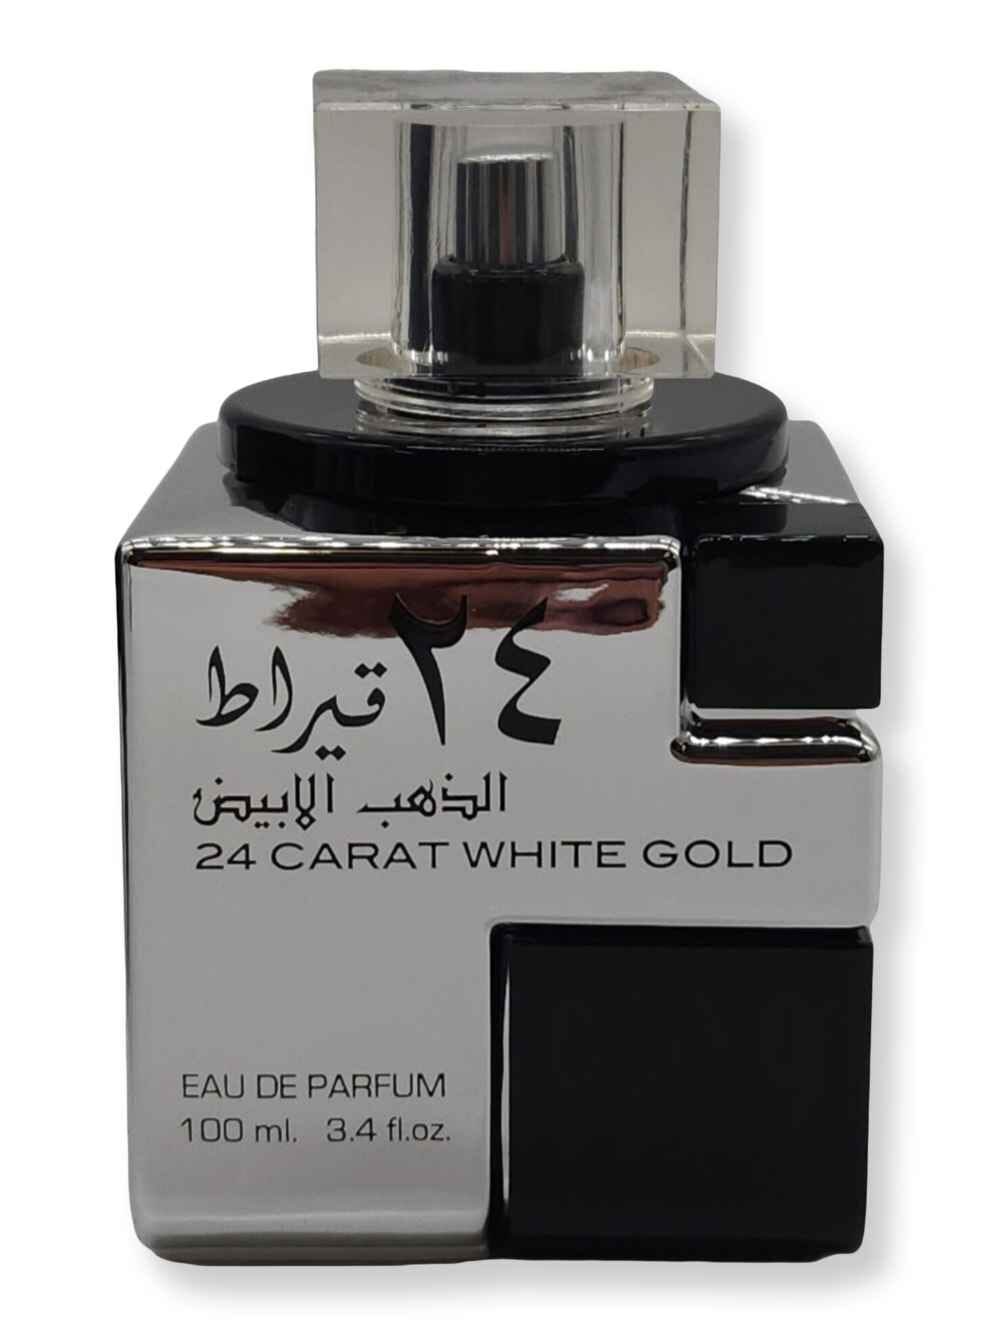 Lattafa Lattafa 24 Carat White Gold EDP Spray 100 ml Perfume 